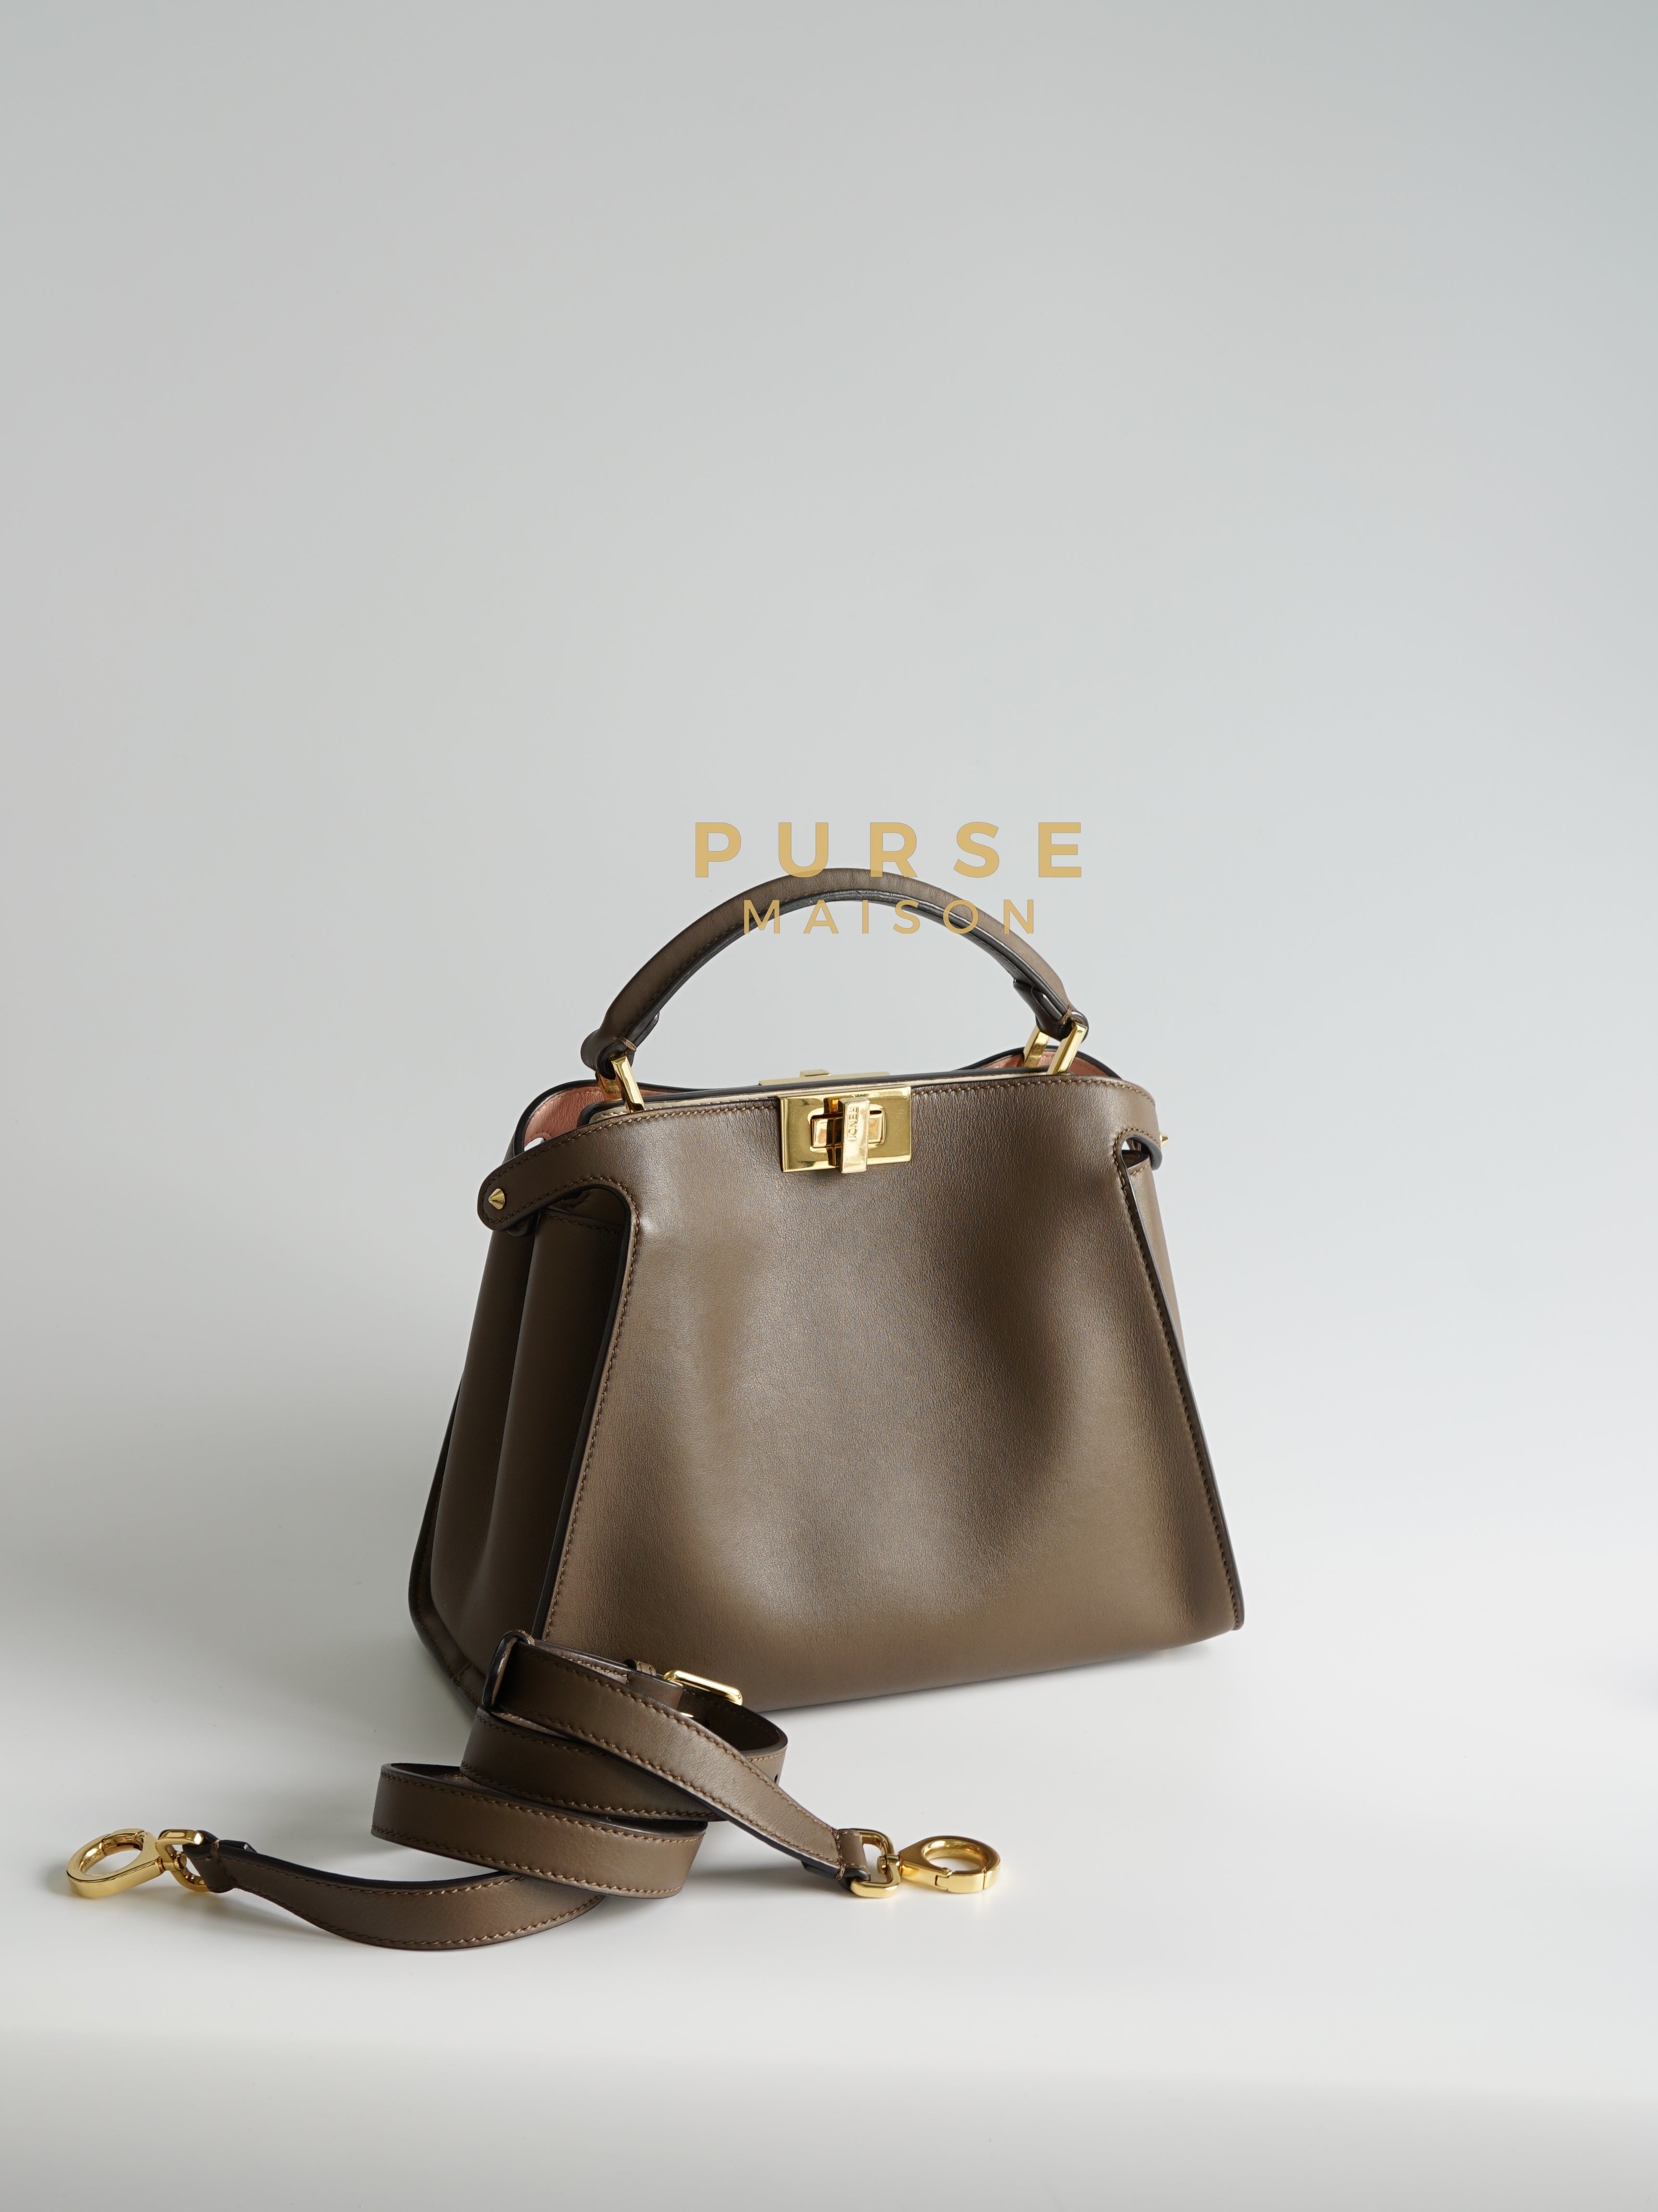 Peekaboo Iconic Medium Vitello Essentially Dark Brown Satchel Bag | Purse Maison Luxury Bags Shop